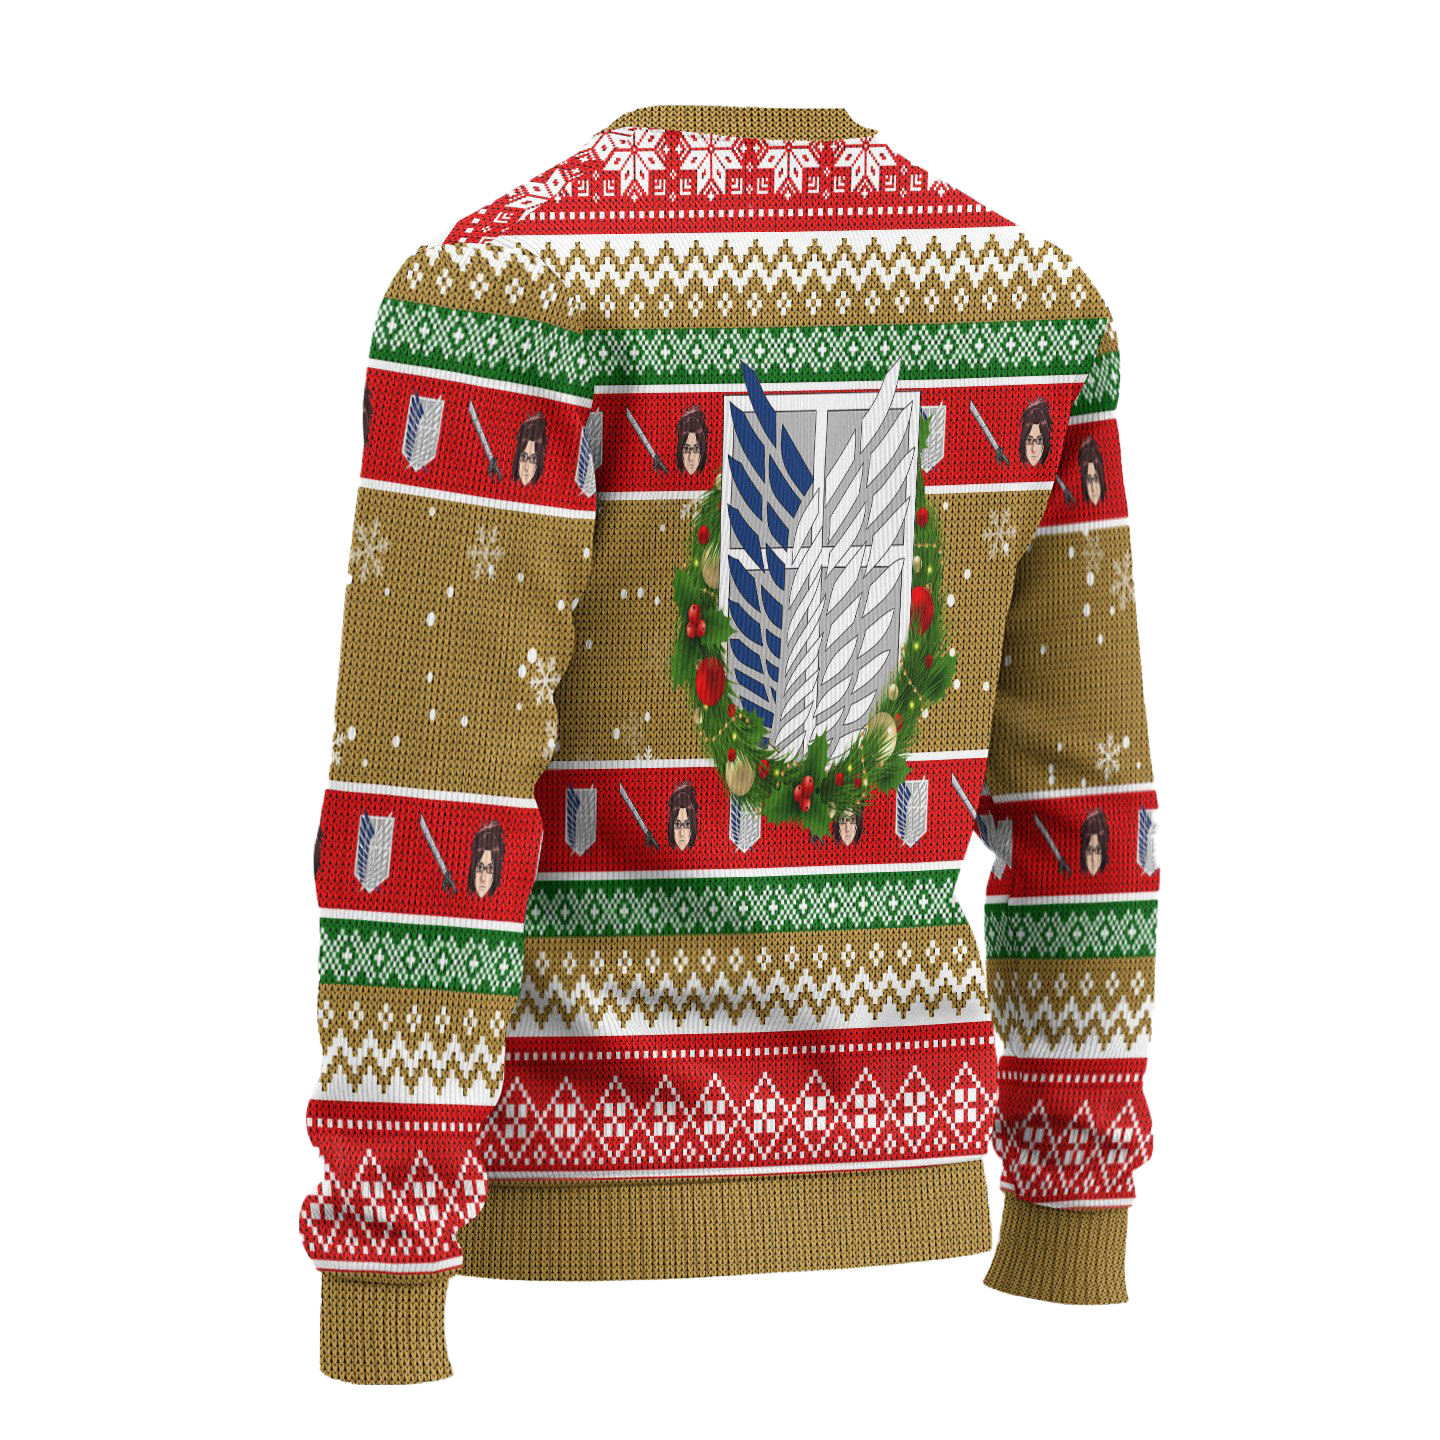 Hange Zoe Attack on Titan Anime Ugly Christmas Sweater Xmas Gift